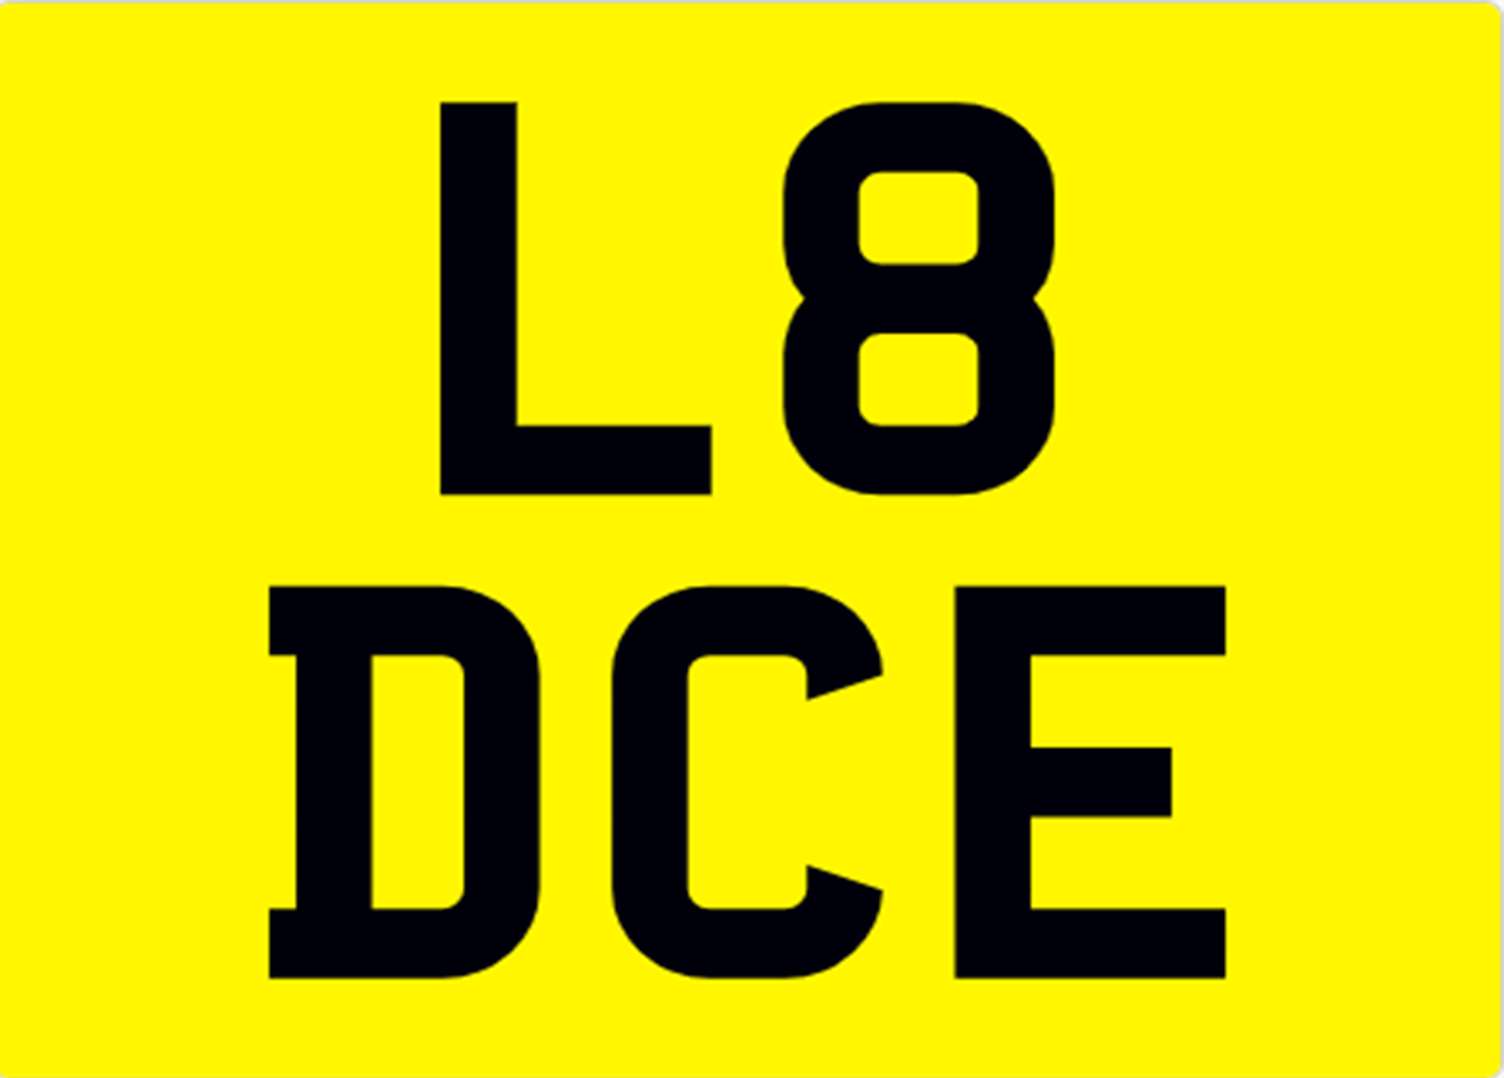 <p>&nbsp; L8 DCE REGISTRATION NUMBER</p>